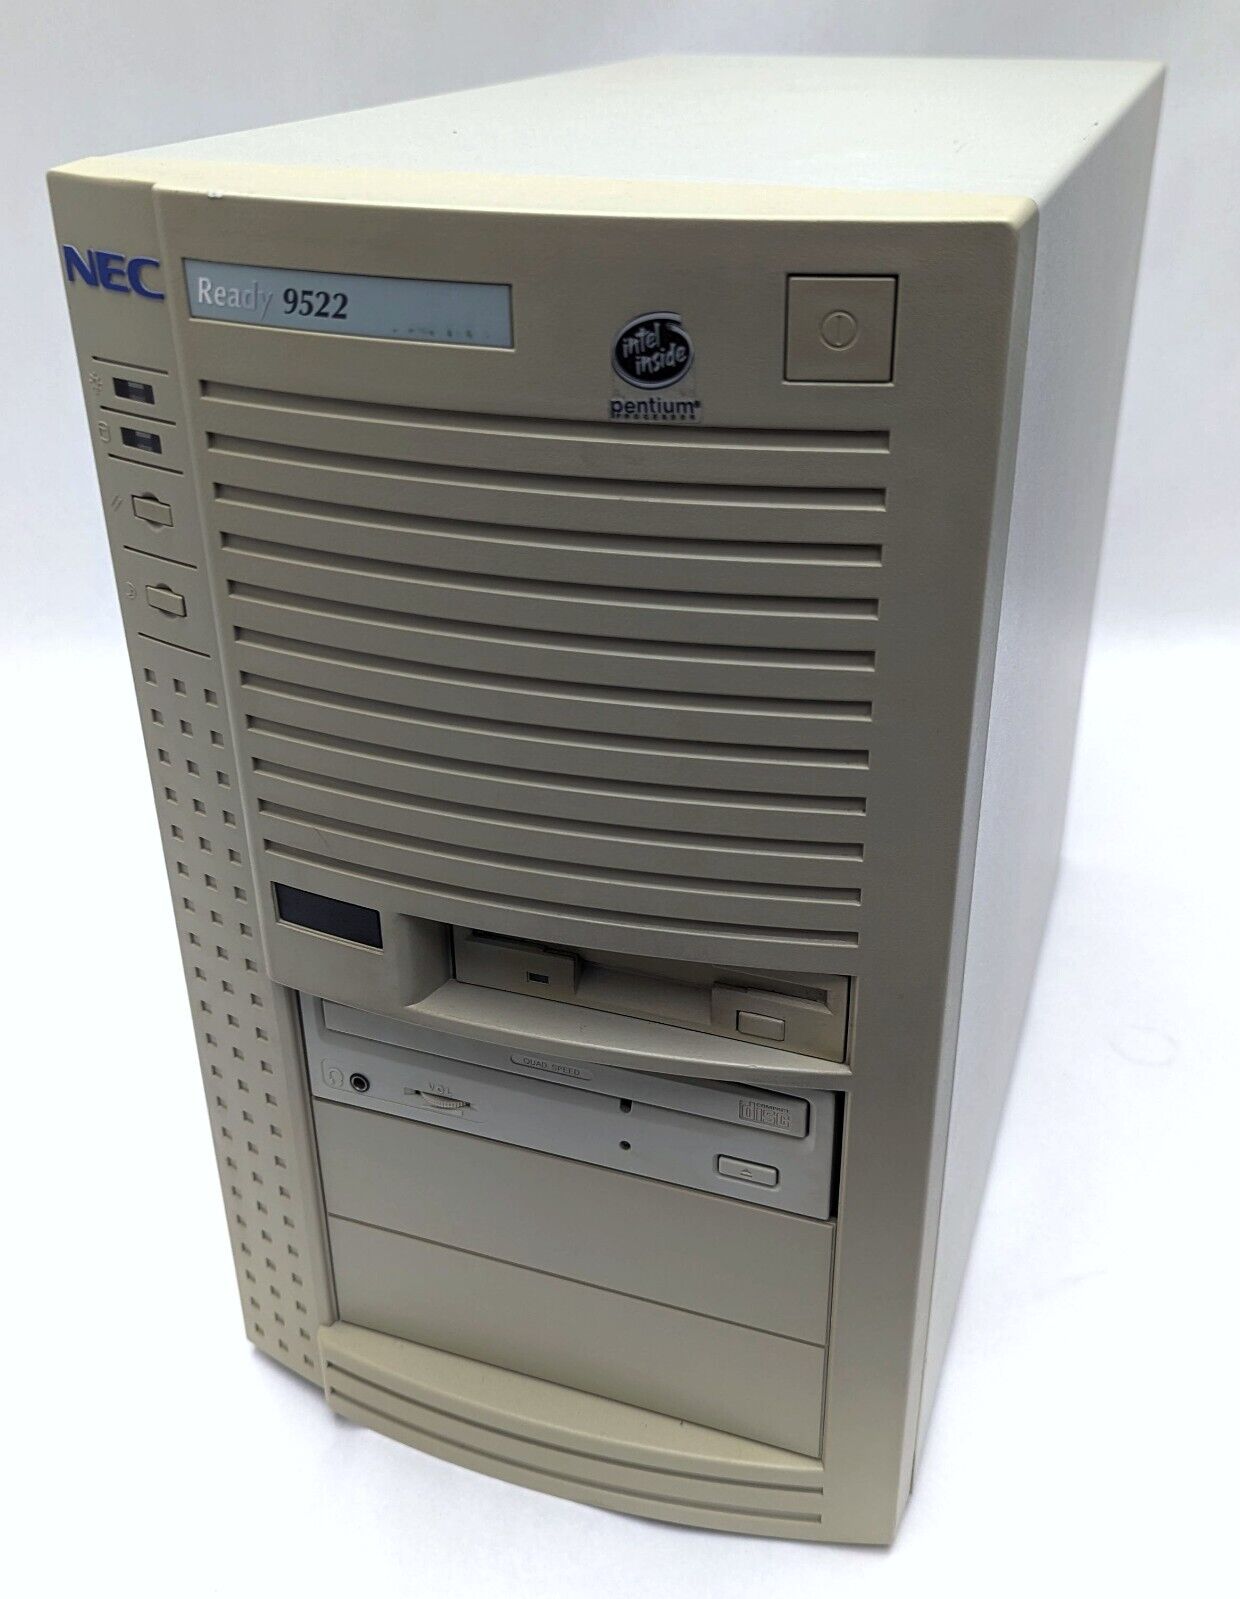 VTG NEC Ready 9522 MT-1710-24833C Desktop Pentium 100MHz 16MB RAM 10GB HDD No OS